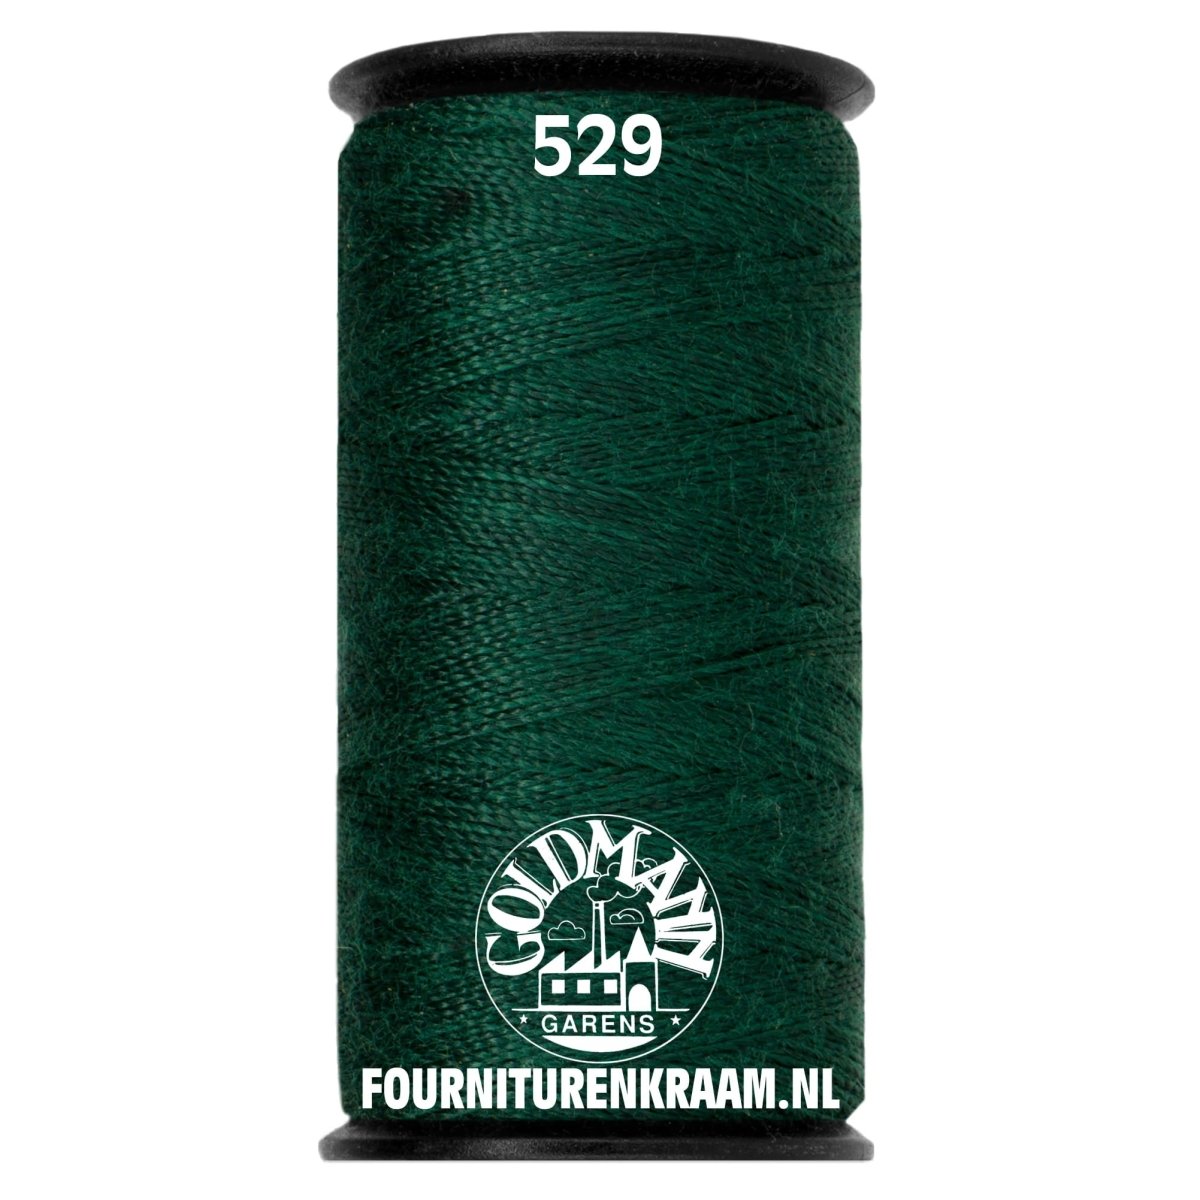 Goldmann garen extra sterk 100m - 529 flessen groen Garen GOLDMANN-STERK-100-529 2410529 - Fourniturenkraam.nl